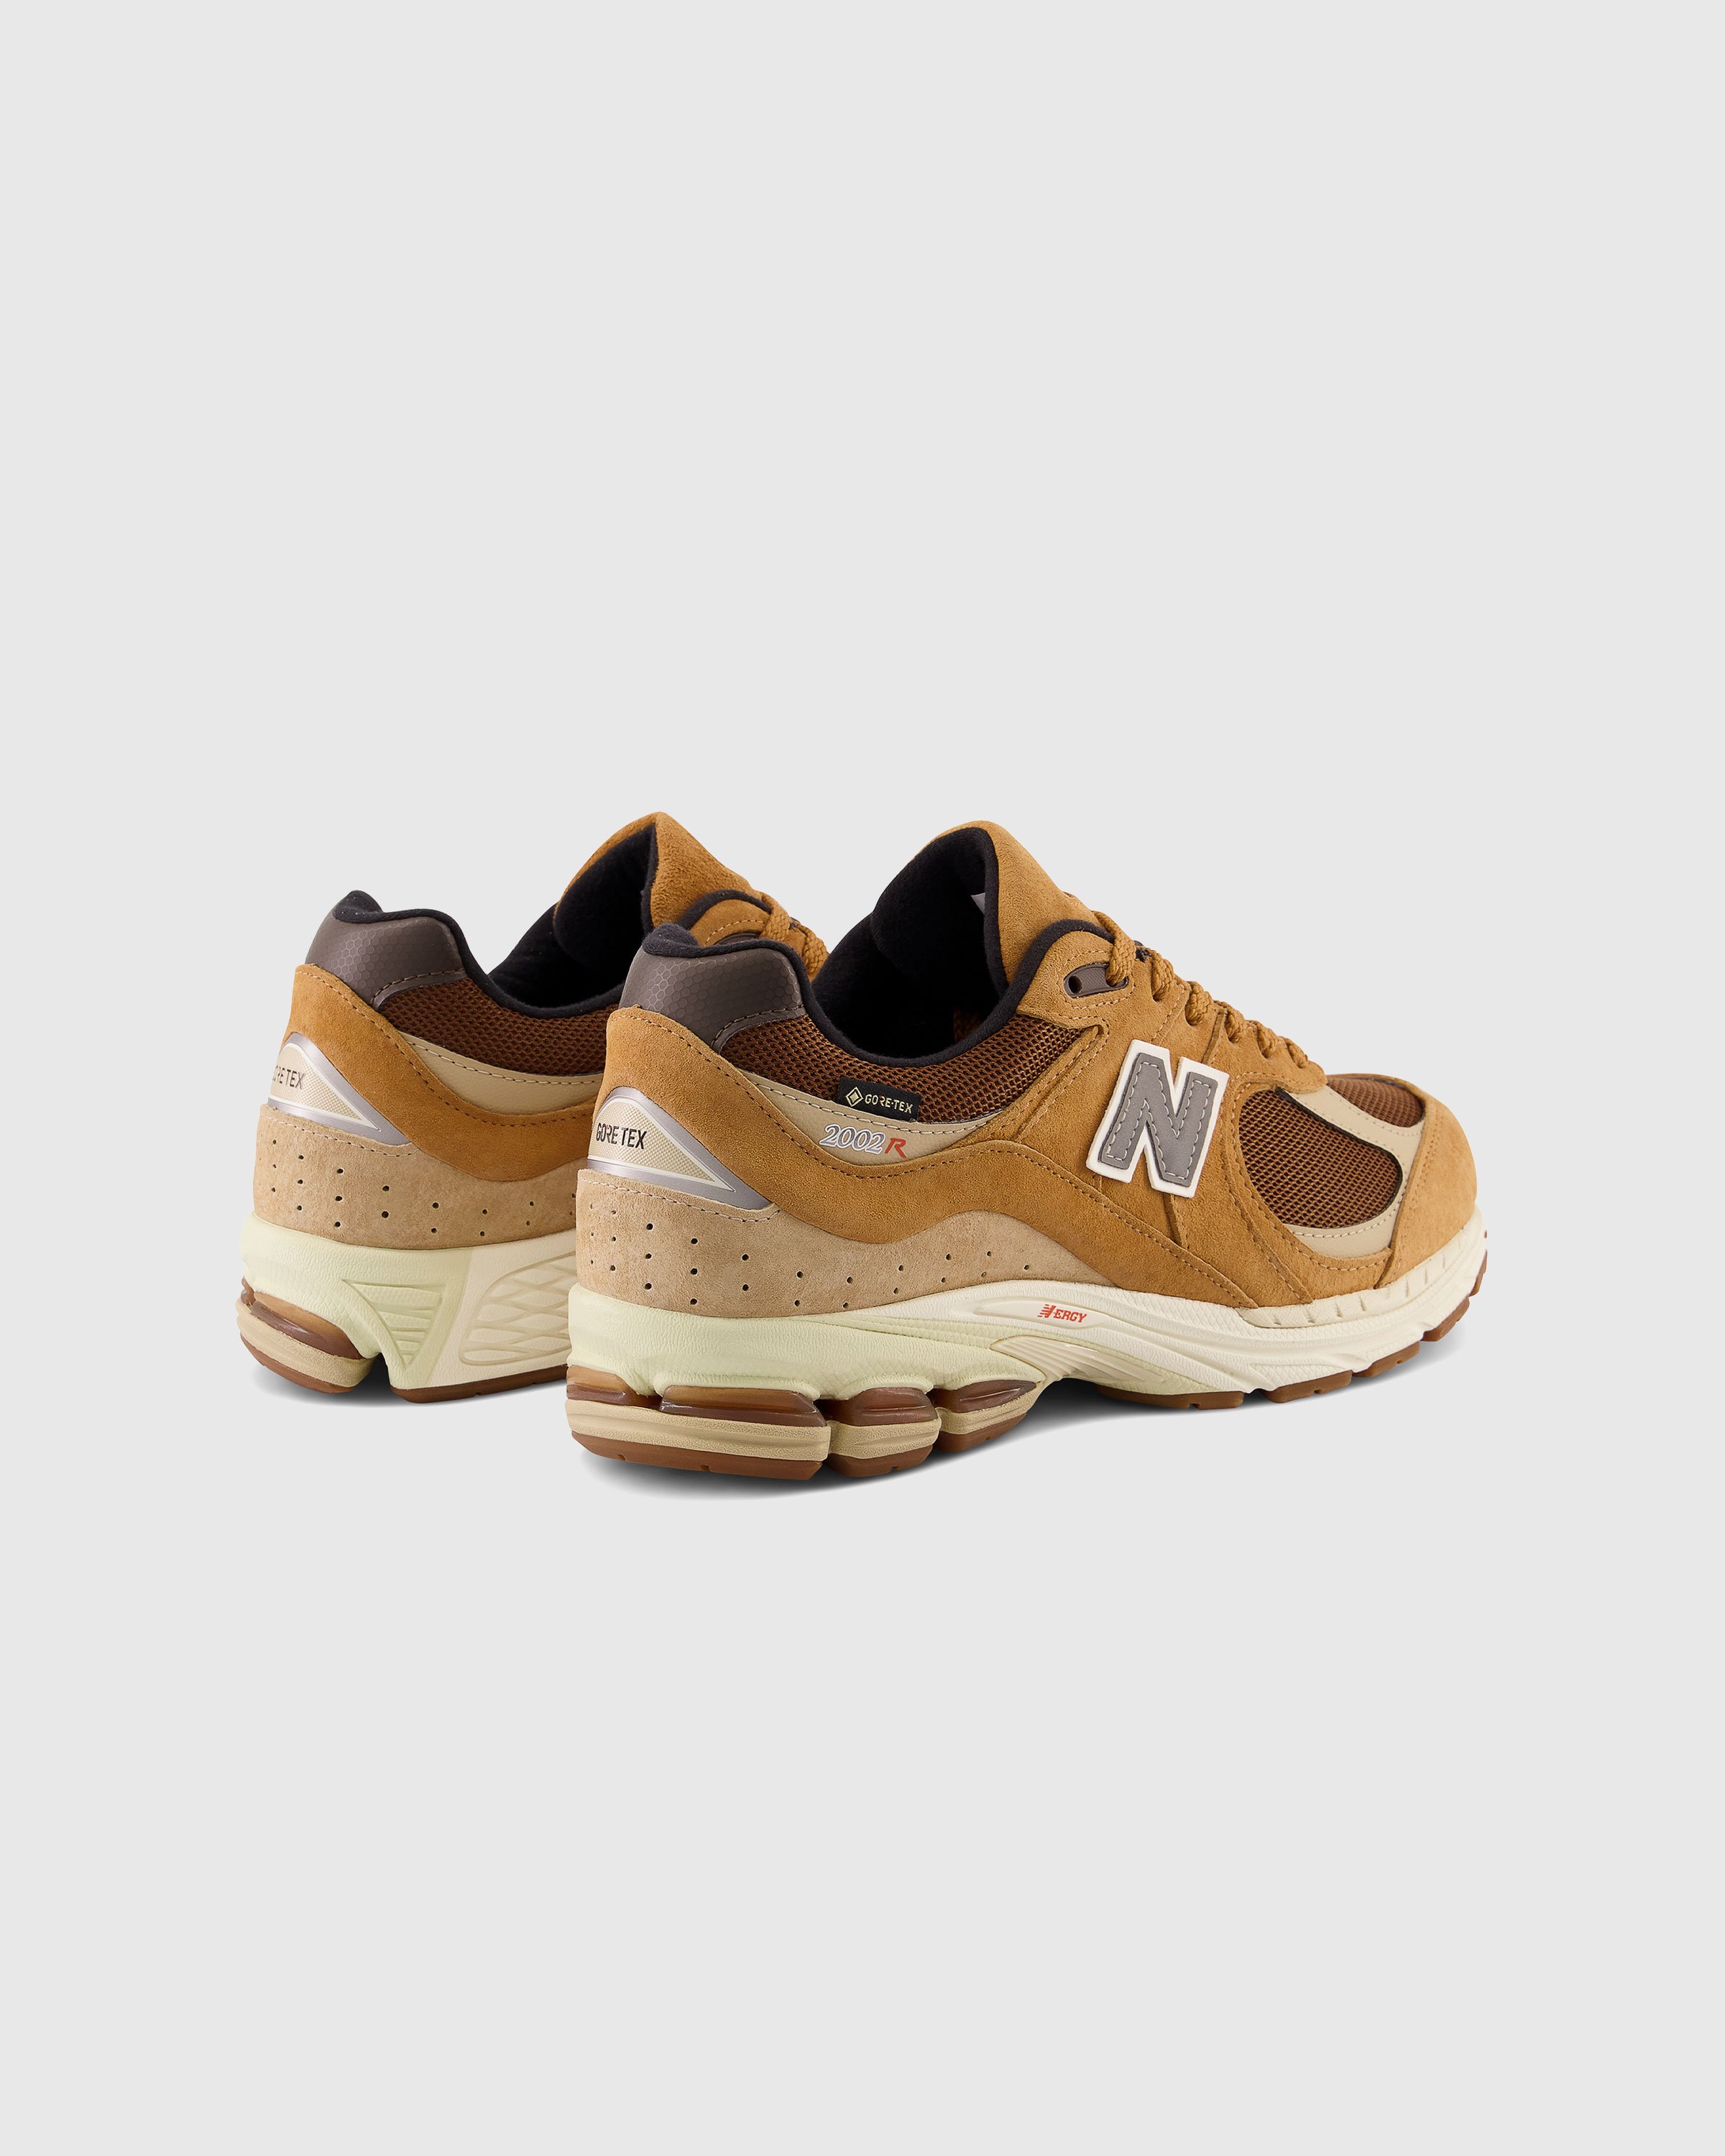 New Balance - 2002RX Tobacco - Footwear - Brown - Image 4